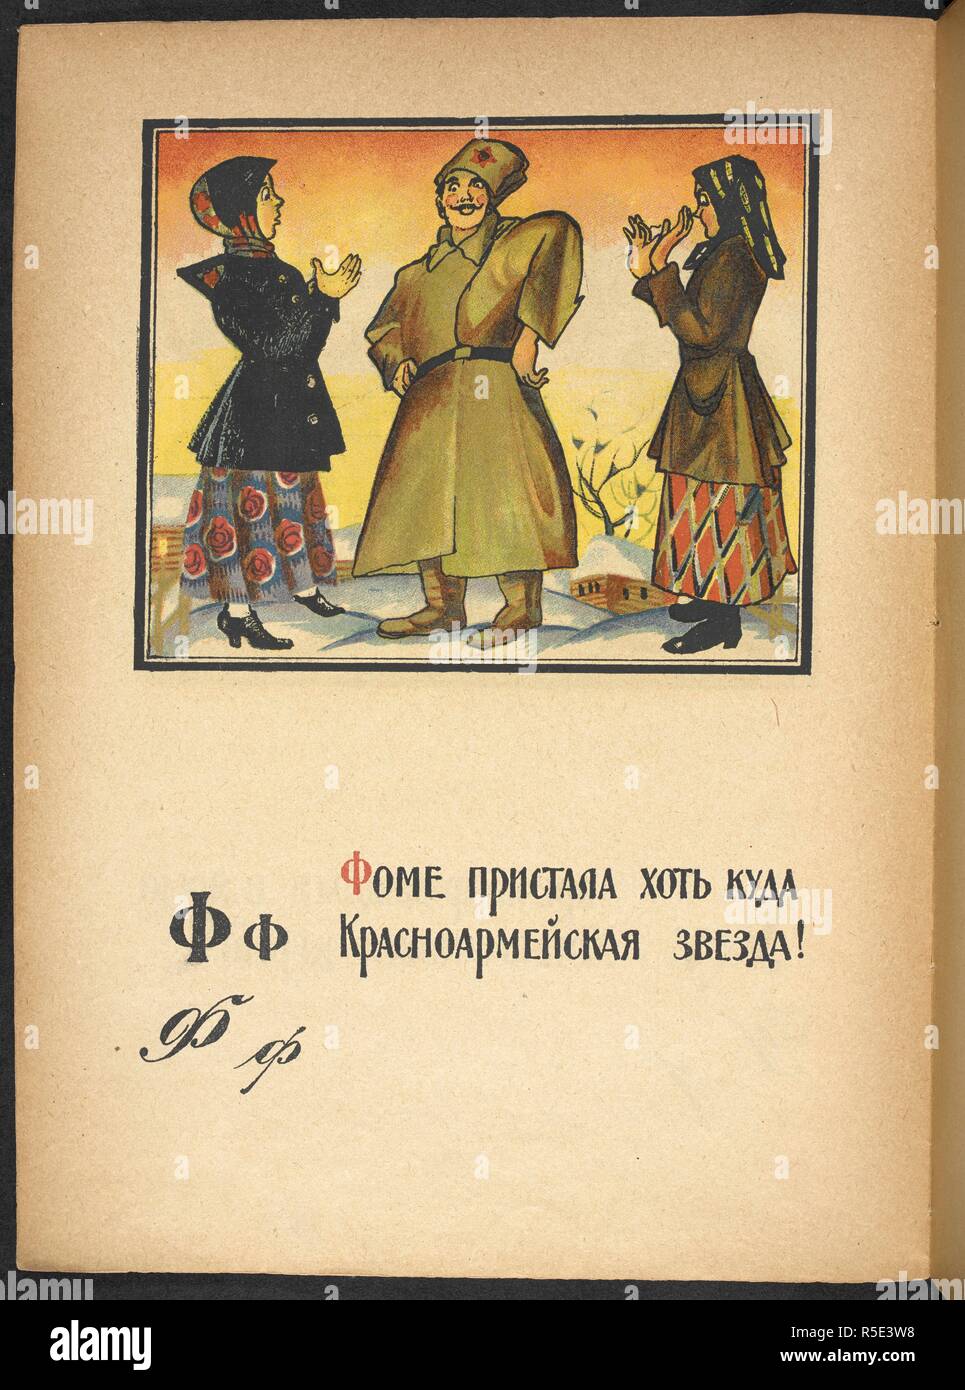 Ð¤Ñ„  Ð¤Ð¾Ð¼Ðµ Ð¿Ñ€Ð¸ÑÑ‚Ð°Ð»Ð° Ñ…Ð¾Ñ‚ÑŒ ÐºÑƒÐ´Ð°  ÐšÑ€Ð°ÑÐ½Ð¾Ð°Ñ€Ð¼ÐµÐ¹ÑÐºÐ°Ñ Ð·Ð²ÐµÐ·Ð´Ð°!  The Red Army star suits Foma very well   Two young women admire a soldier in a Red Army uniform.  . ÐÐ·Ð±ÑƒÐºÐ° ÐºÑ€Ð°ÑÐ½Ð¾Ð°Ñ€Ð¼ÐµÐ¹Ñ†Ð° / ÐÐ°Ð¿Ð¸ÑÐ°Ð» Ð¸ Ð½Ð°Ñ€Ð¸ÑÐ¾Ð²Ð°Ð». [Moskva] : [Otdel voennoiÌ† lit-ry pri Revoliï¸ uï¸¡tï¸ sï¸¡ionnom sovete Respubliki]: [Gos. izd-vo], [1921] The department of war literature under the revolutionary military Soviet of the republic. State publishing house. Moscow. Source: Cup.401.g.25 no.10v. Language: Russian. Author: Moor, DmitriiÌ† Stakhievich. Stock Photo